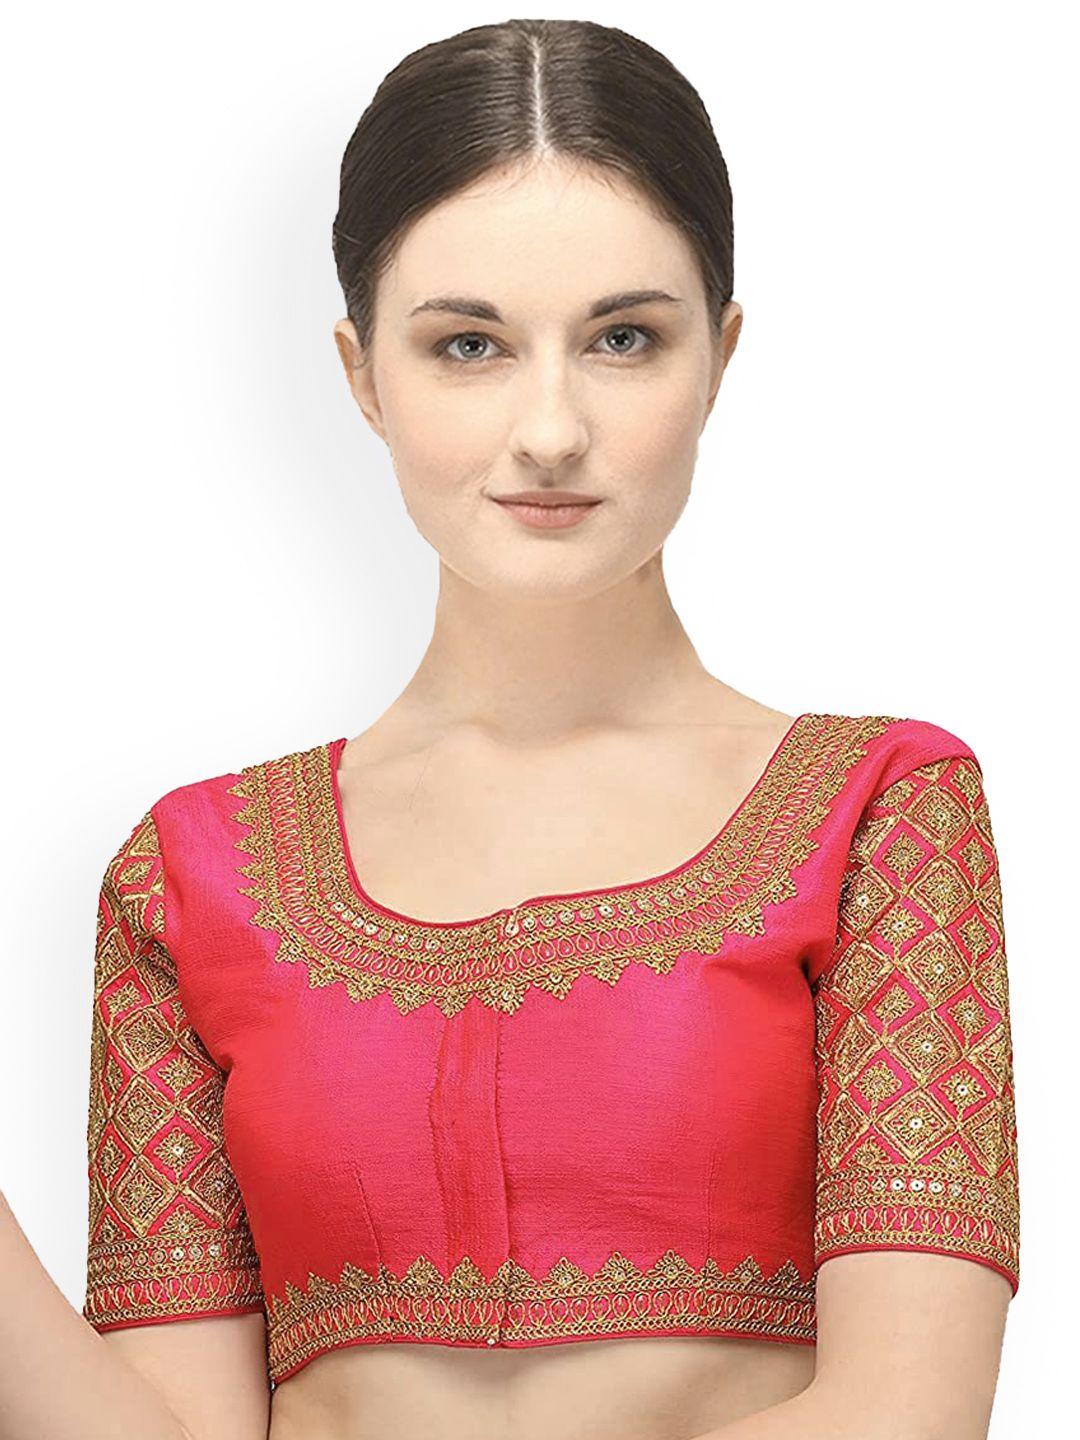 sumaira-tex-women-peach-&-gold-embroidered-ready-made-saree-blouse